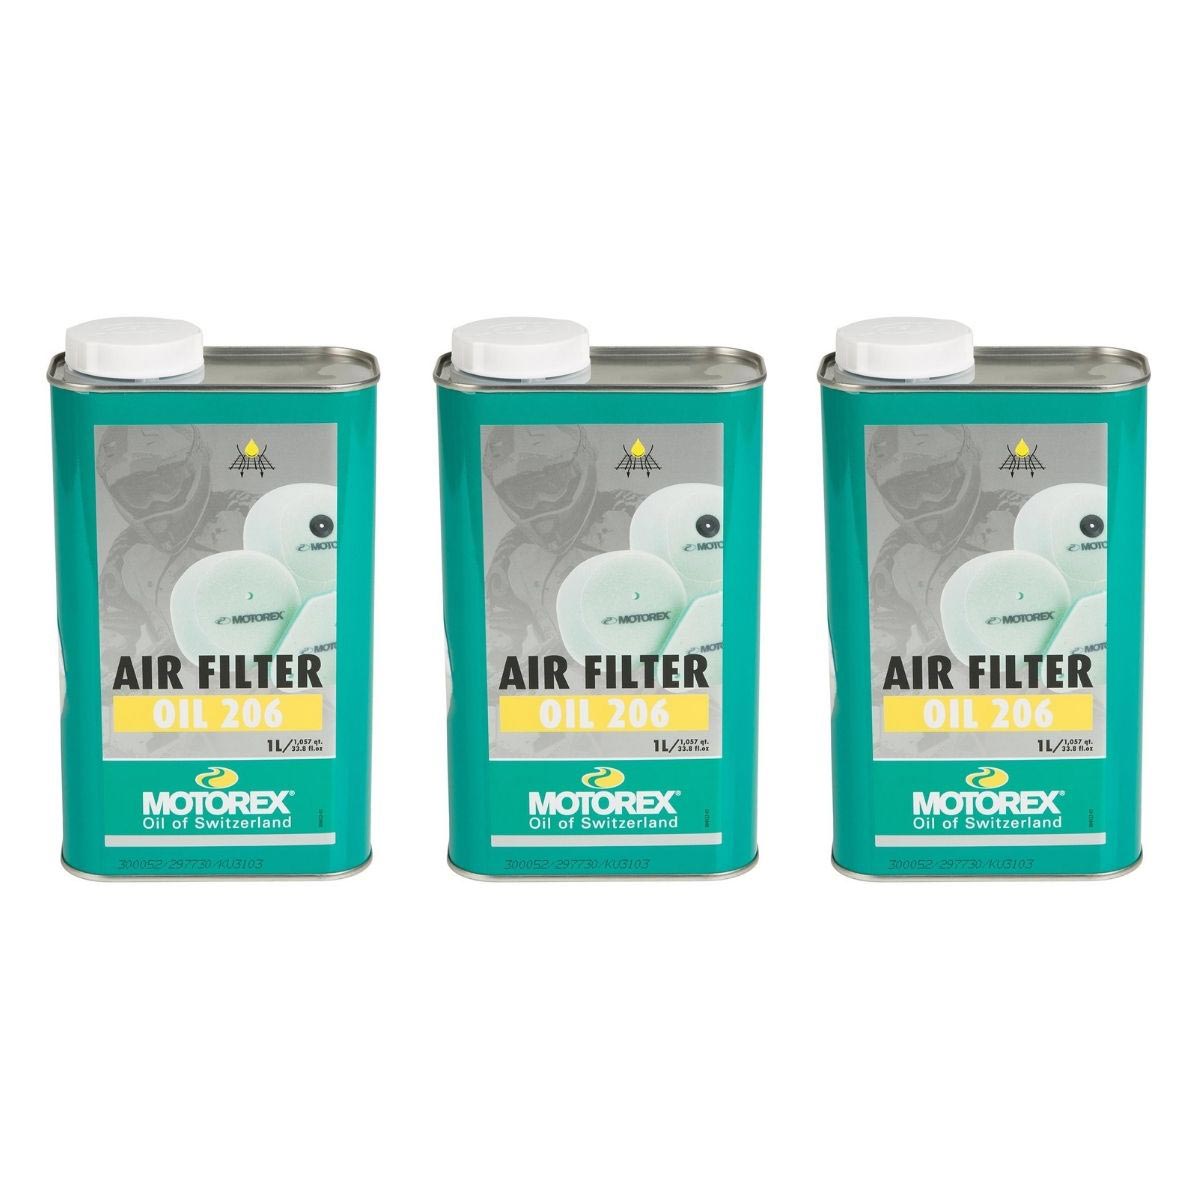 Motorex Air Filter Oil 206 Set of 3, 1 L each